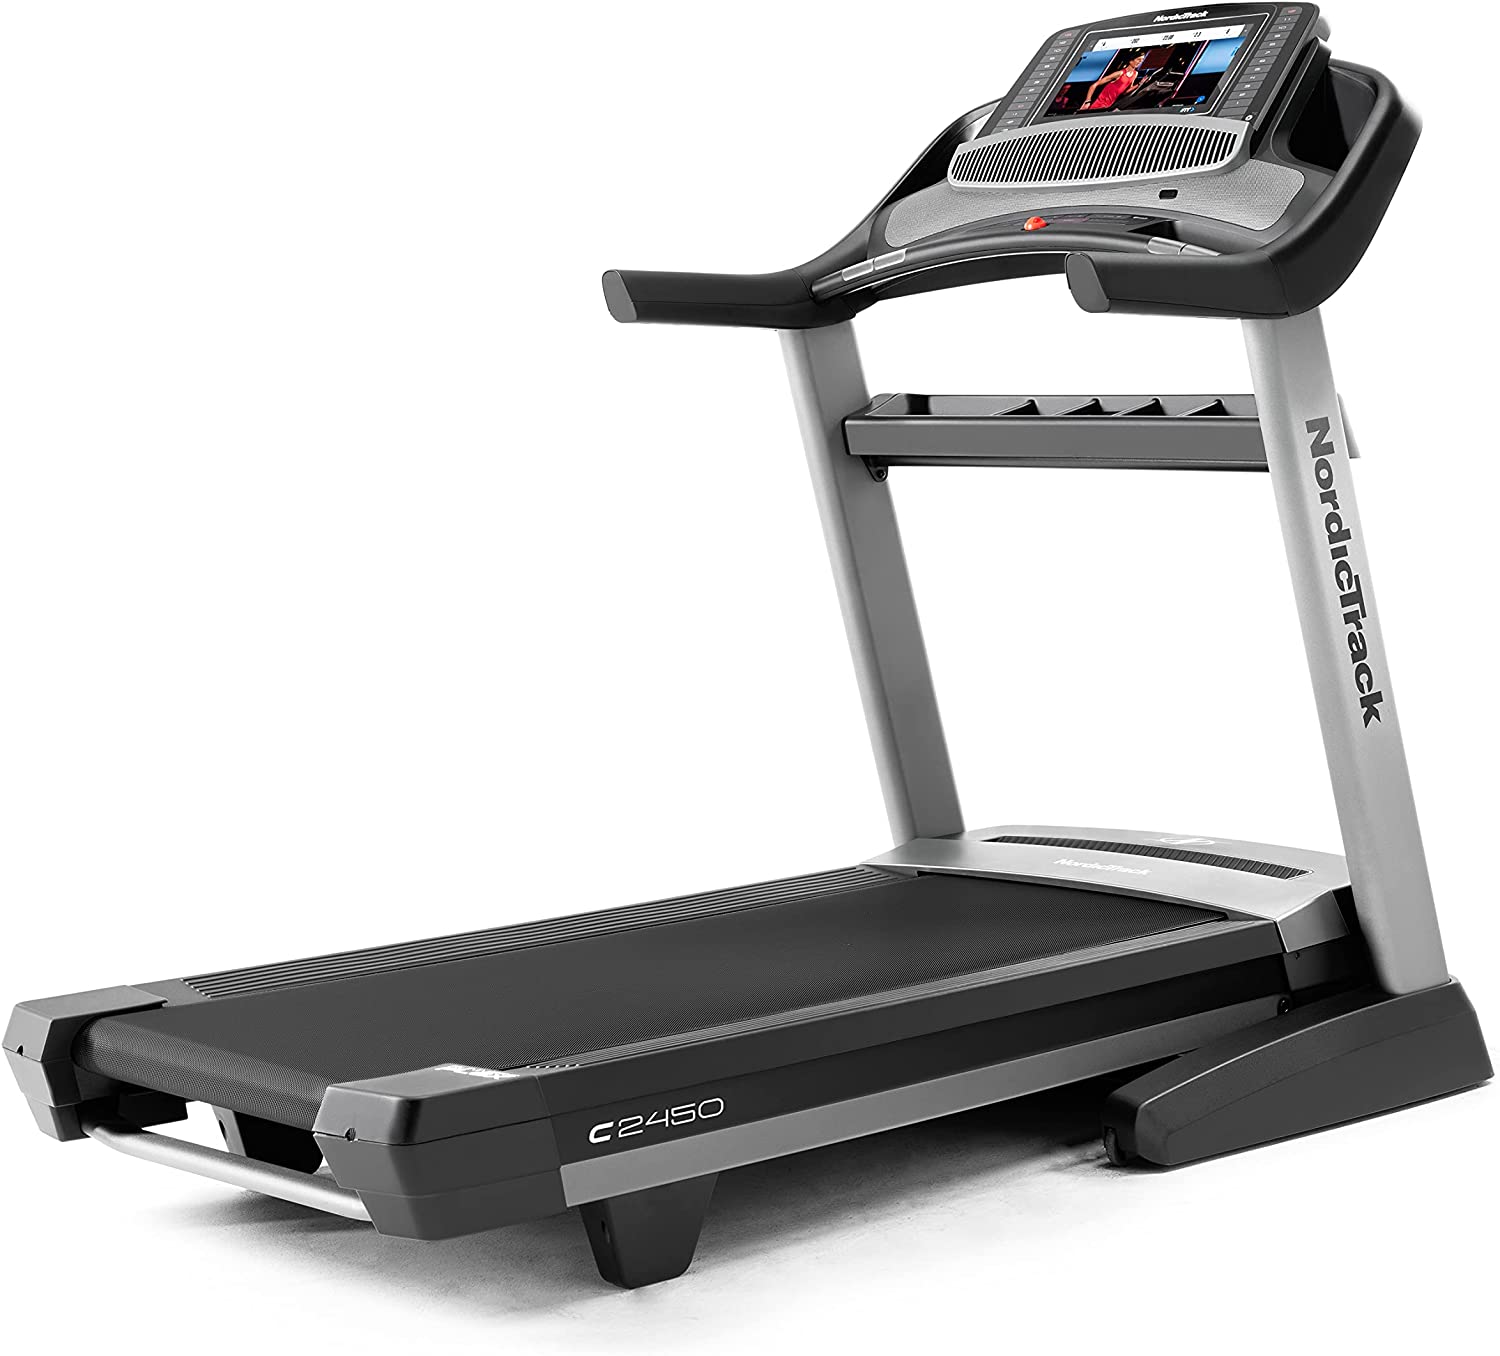 2021 Nordictrack 2450 Commercial Treadmill